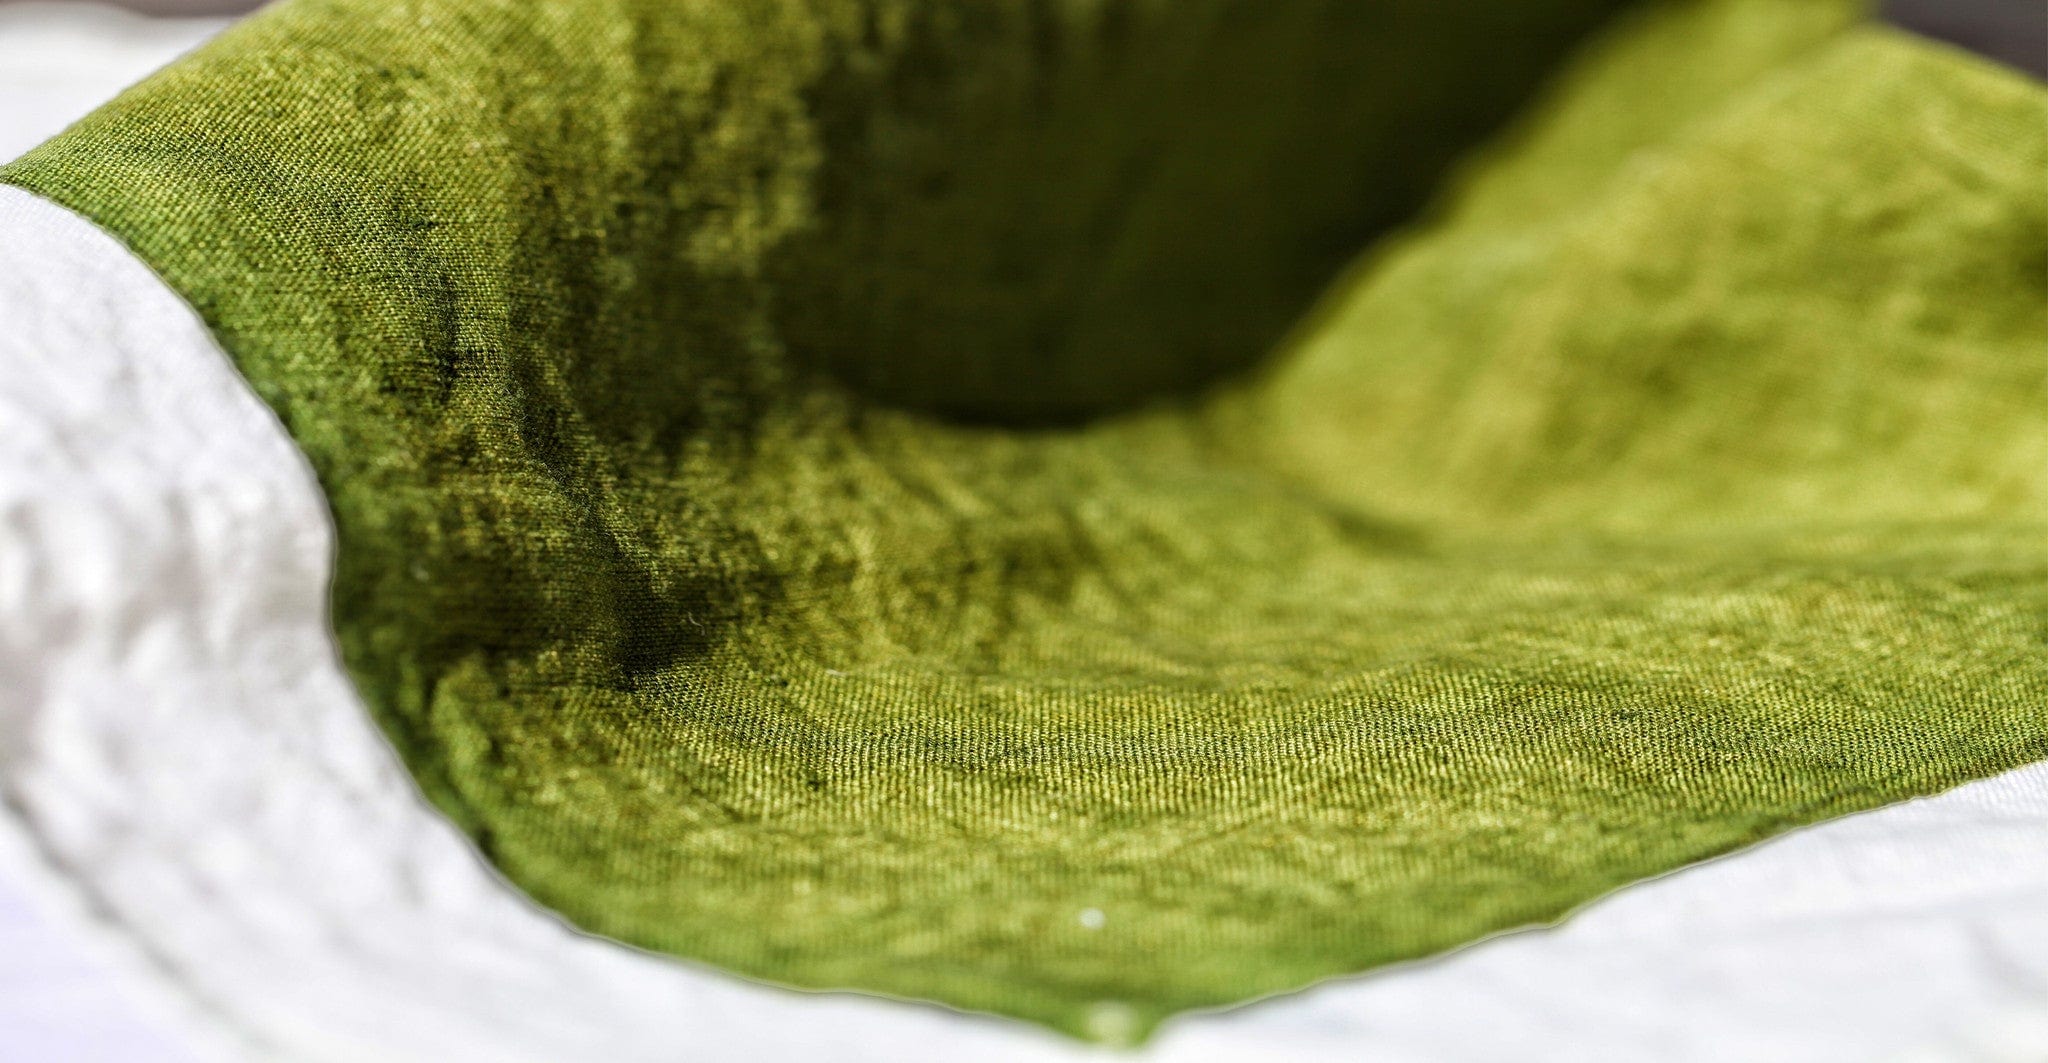 Full Field Linen Napkin in Avocado Green, 50x50cm